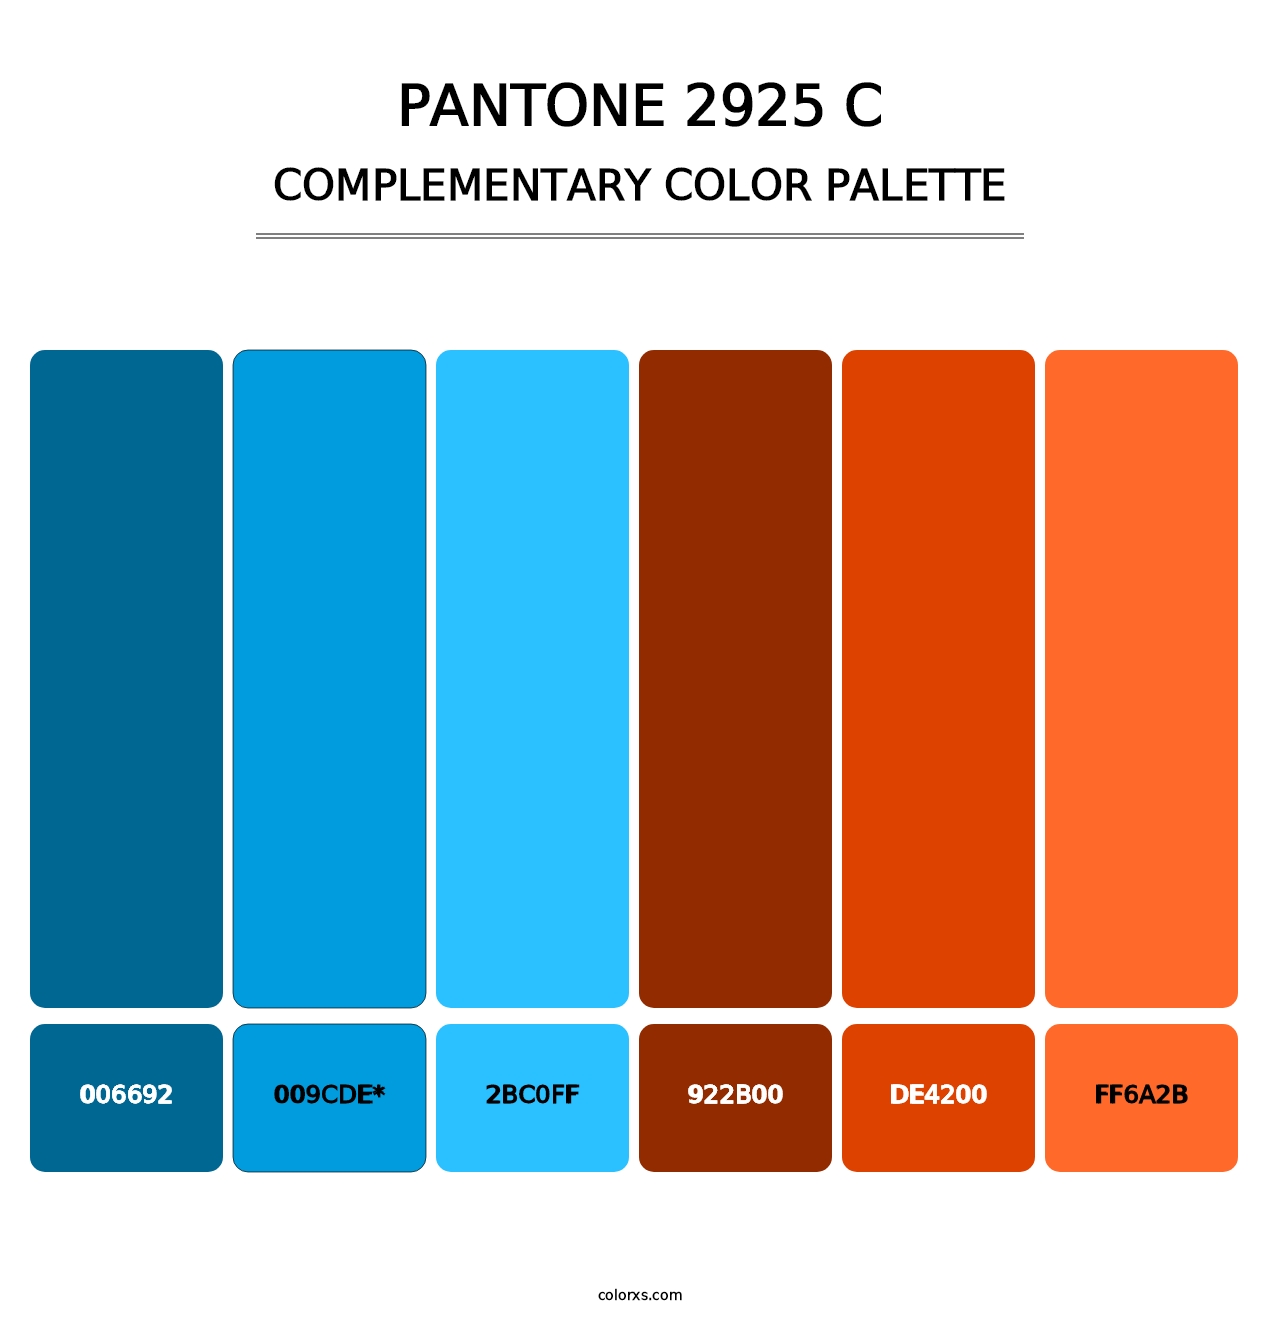 PANTONE 2925 C - Complementary Color Palette